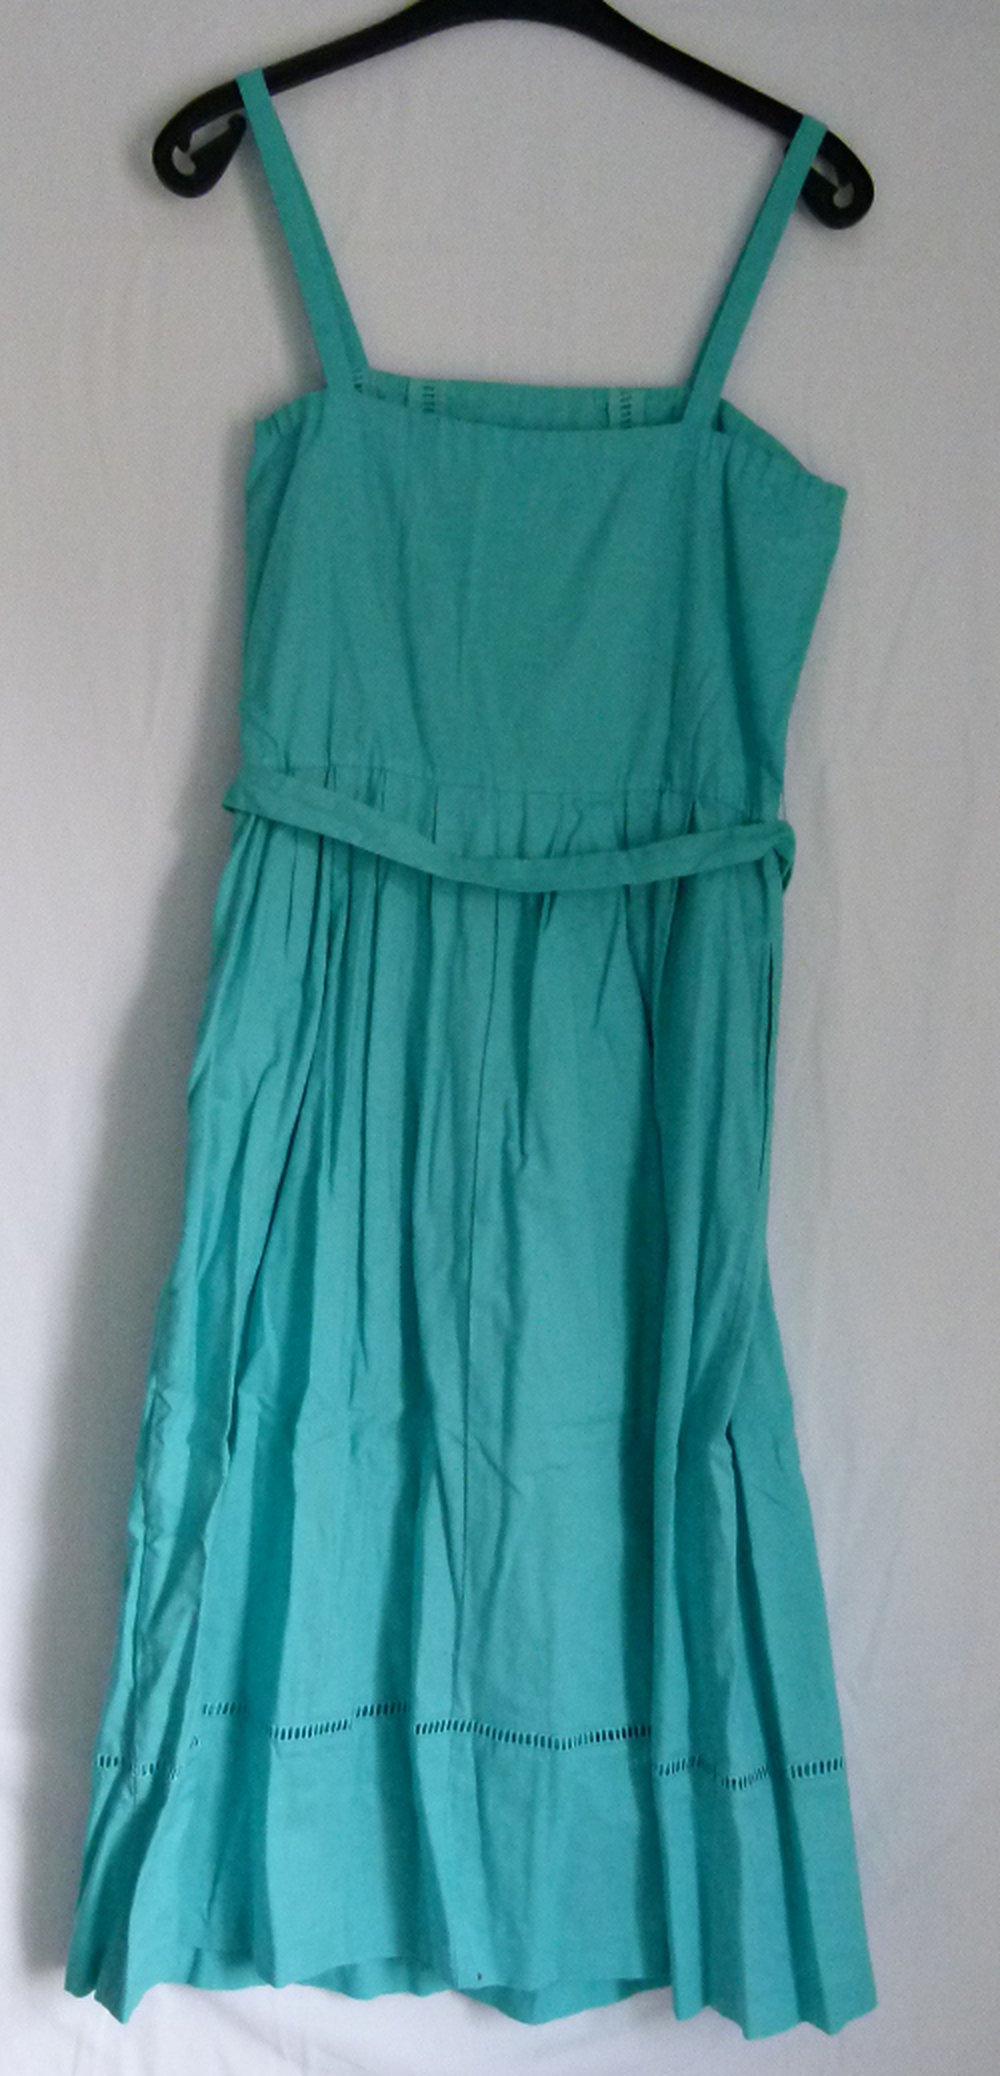 Vintage Sommer Kleid, türkisgrün mint, mit Applikation, Boho Retro Hippie Goa Festival Strand Elfen Cottagecore